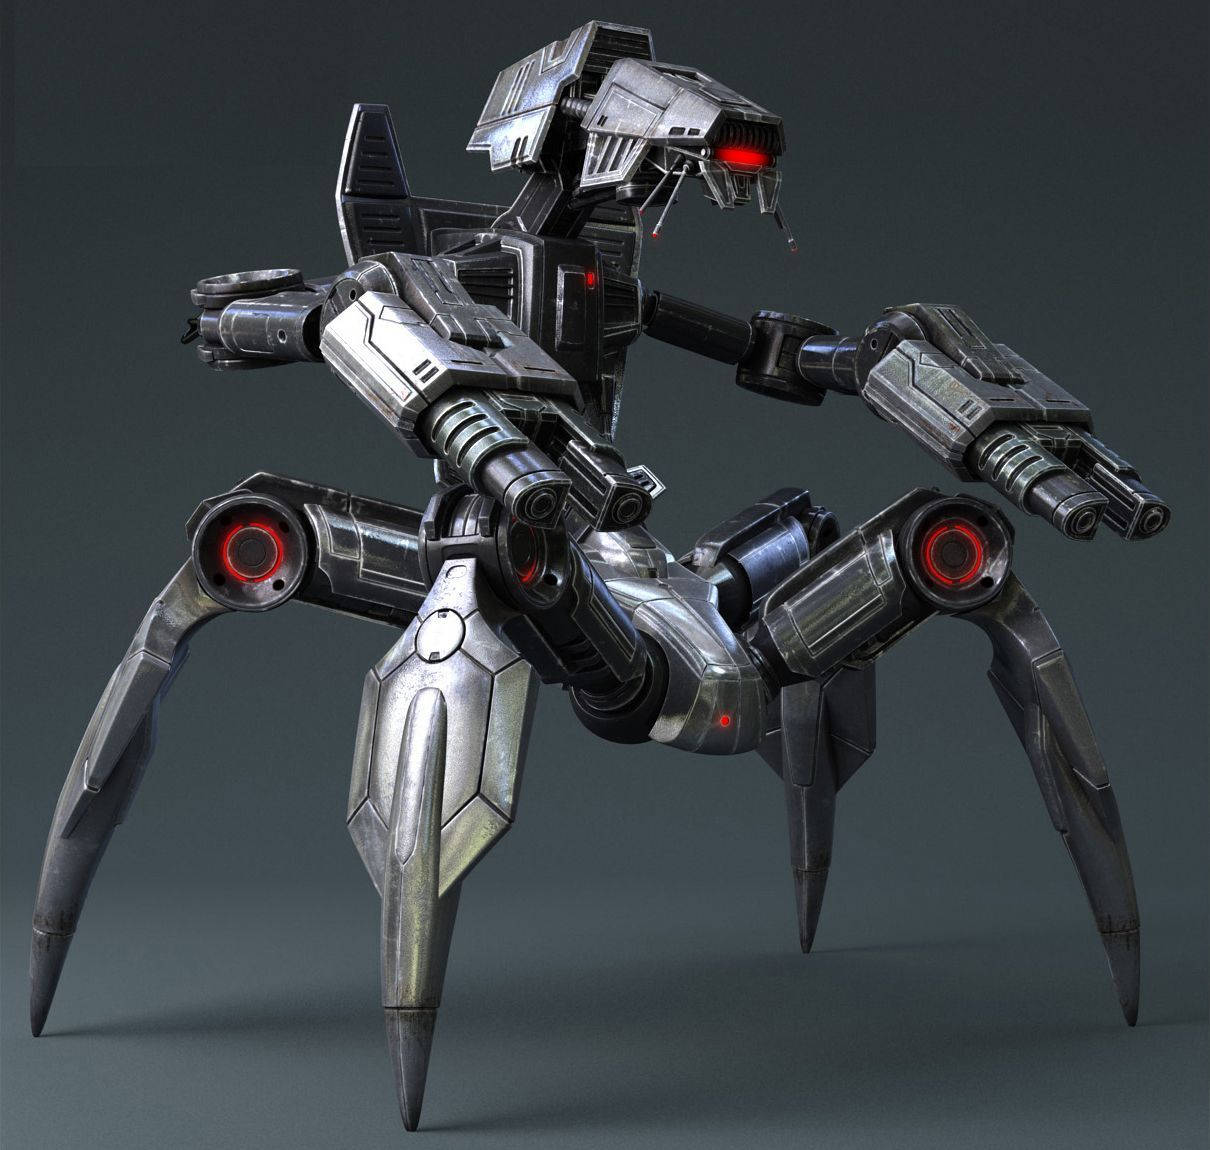 Futuristic Four-legged Droid In Action Wallpaper